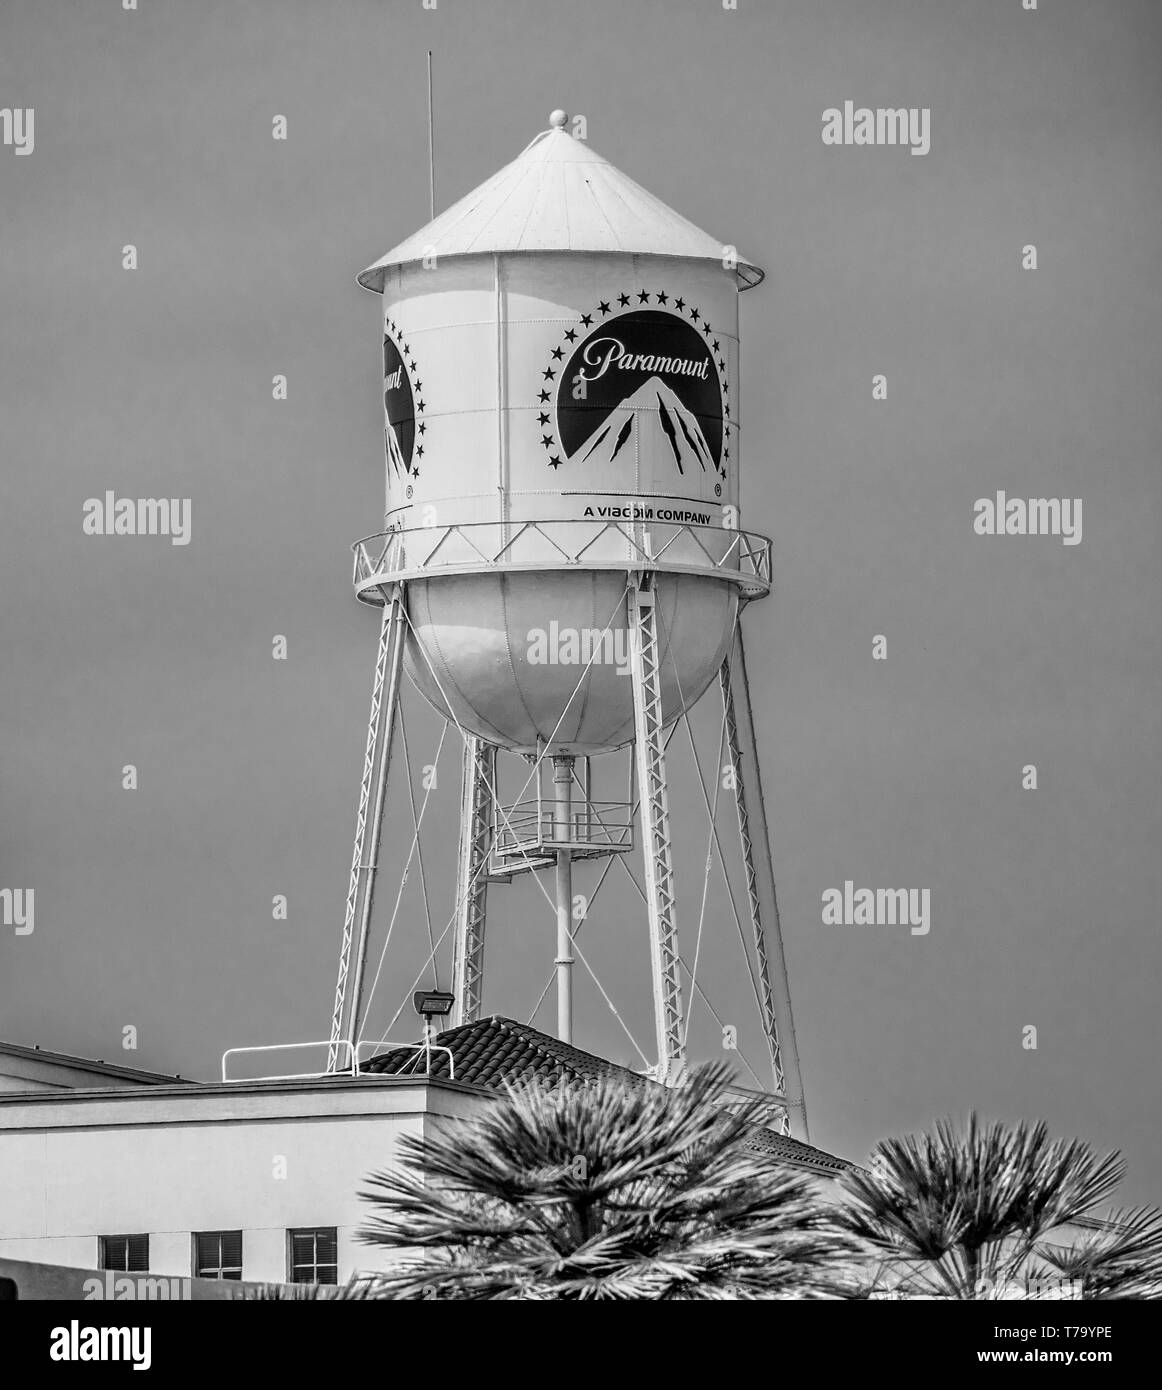 Turm bei Paramount Pictures Film Studios in Los Angeles, Kalifornien, USA - 18. MÄRZ 2019 Stockfoto